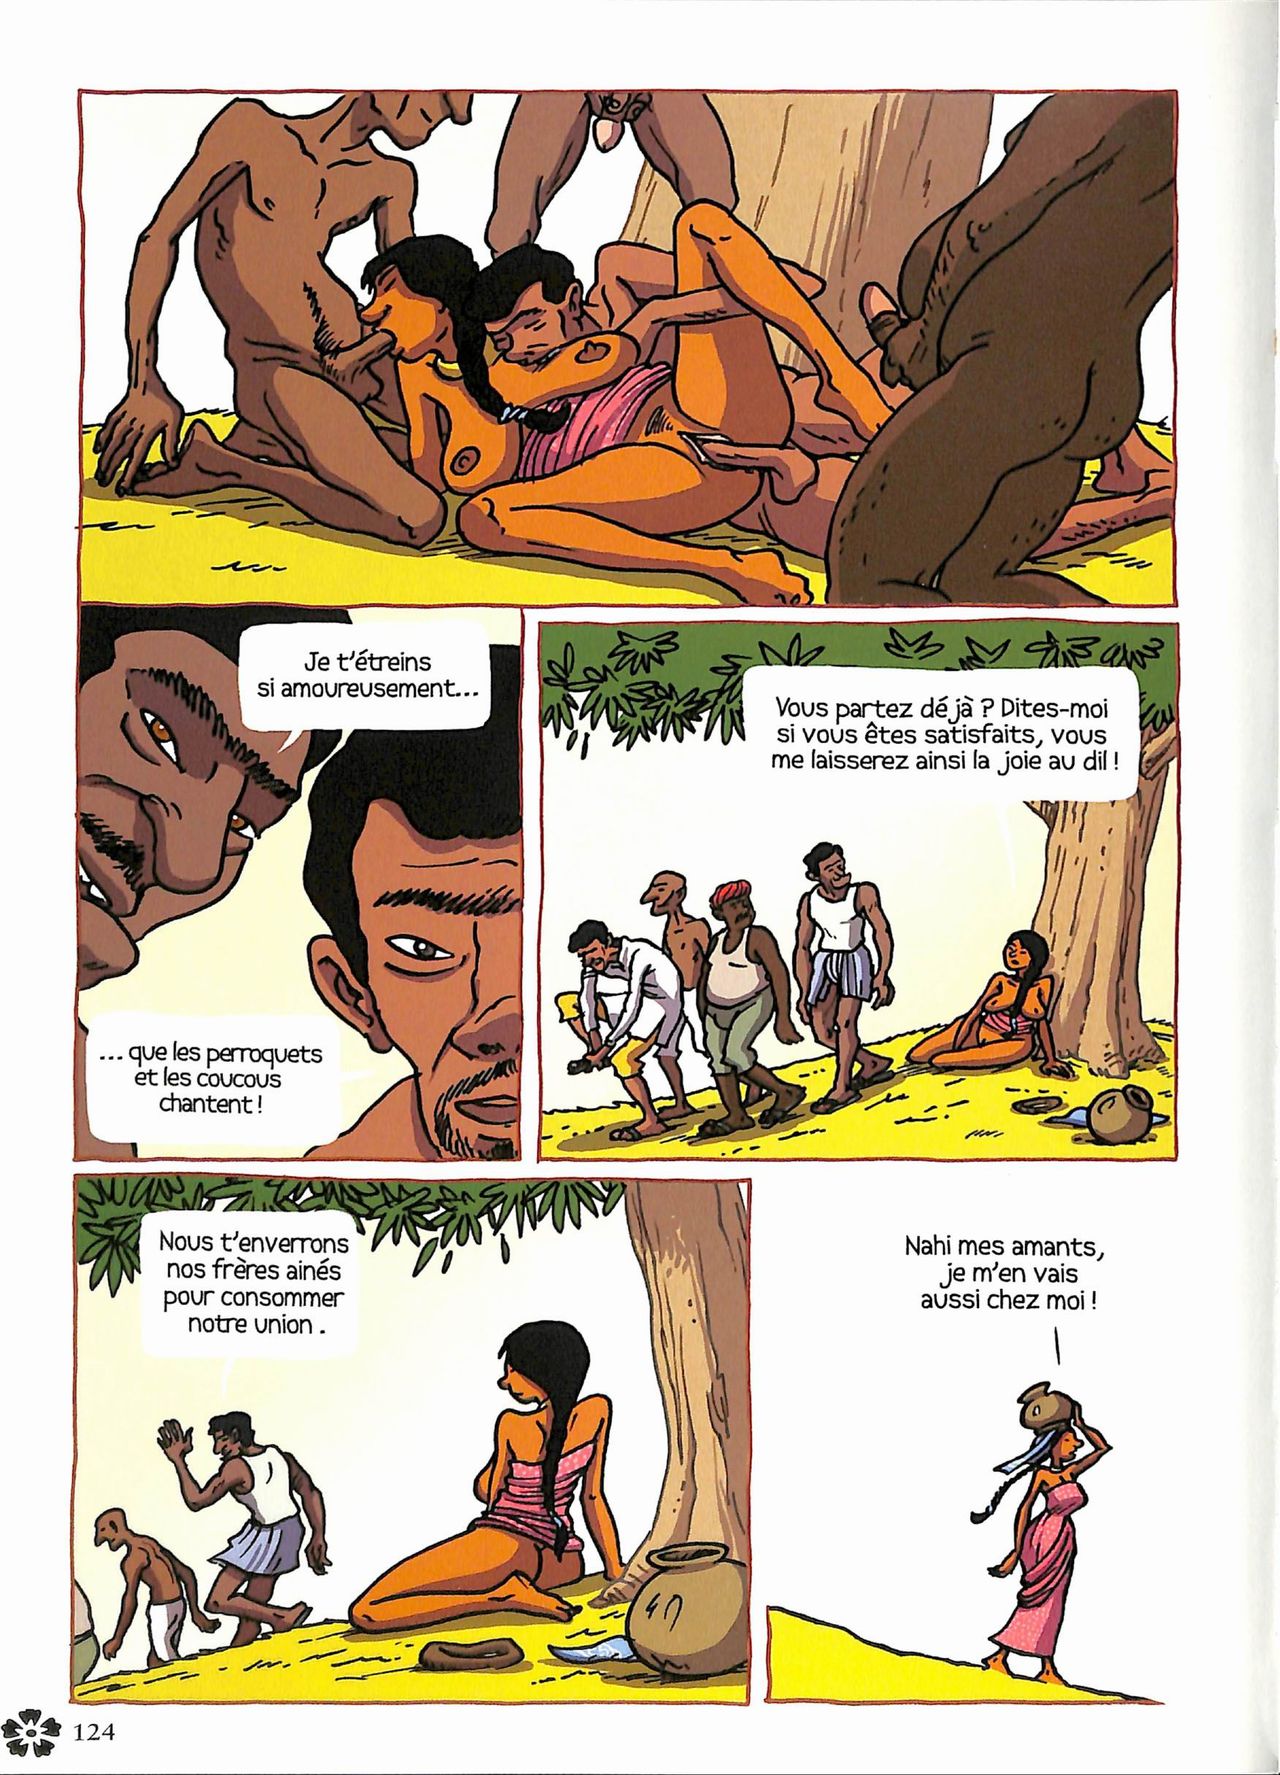 Kama Sutra en bandes dessinées - Kama Sutra with Comics numero d'image 124